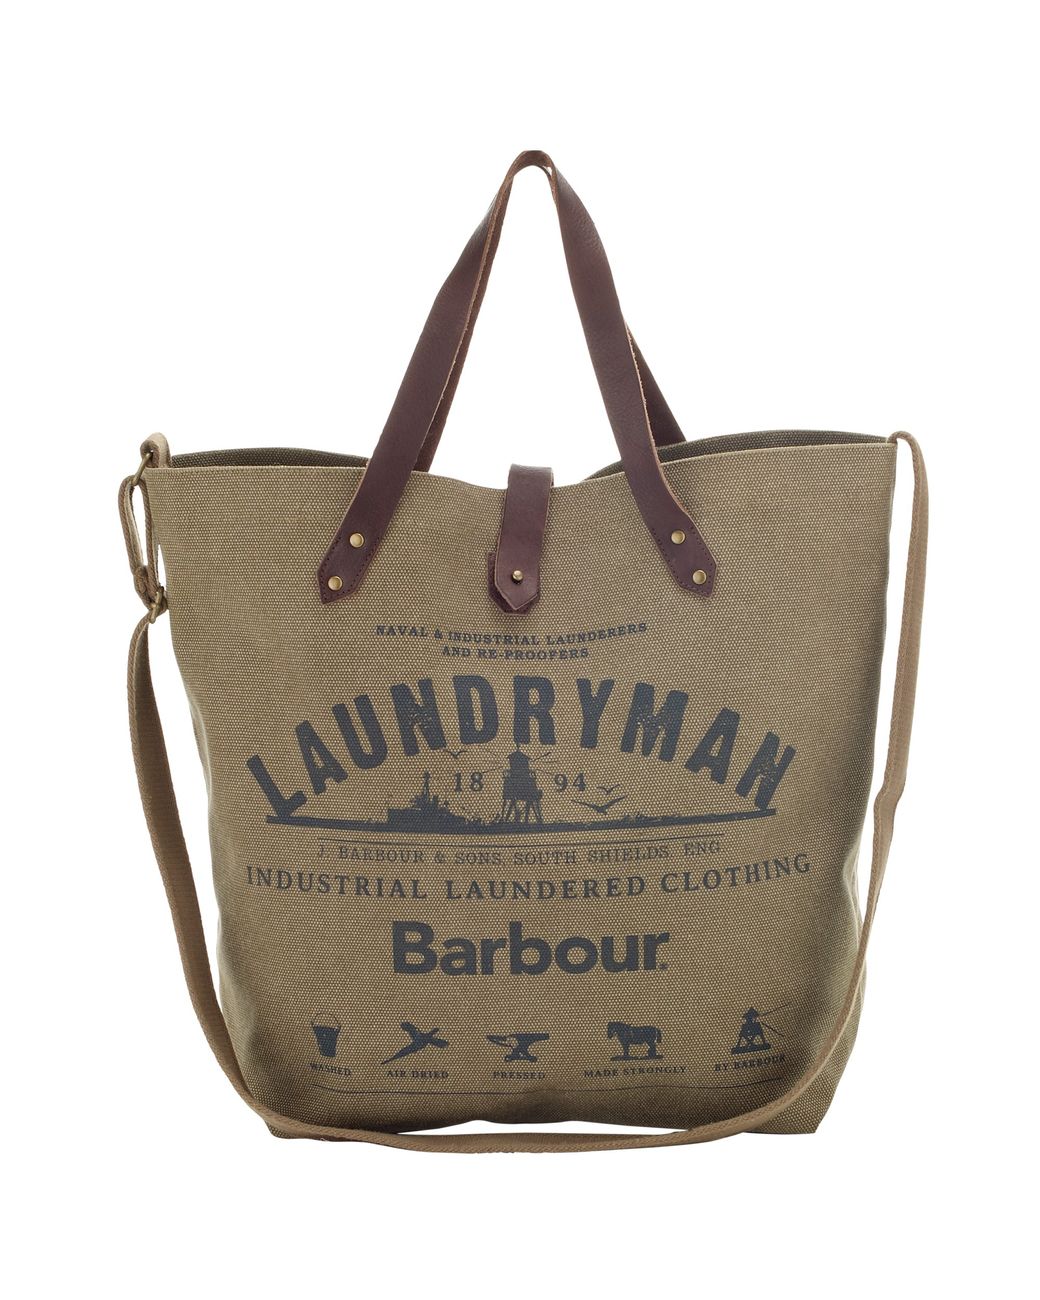 Barbour Canvas Tote Bag in Natural for Men | Lyst UK